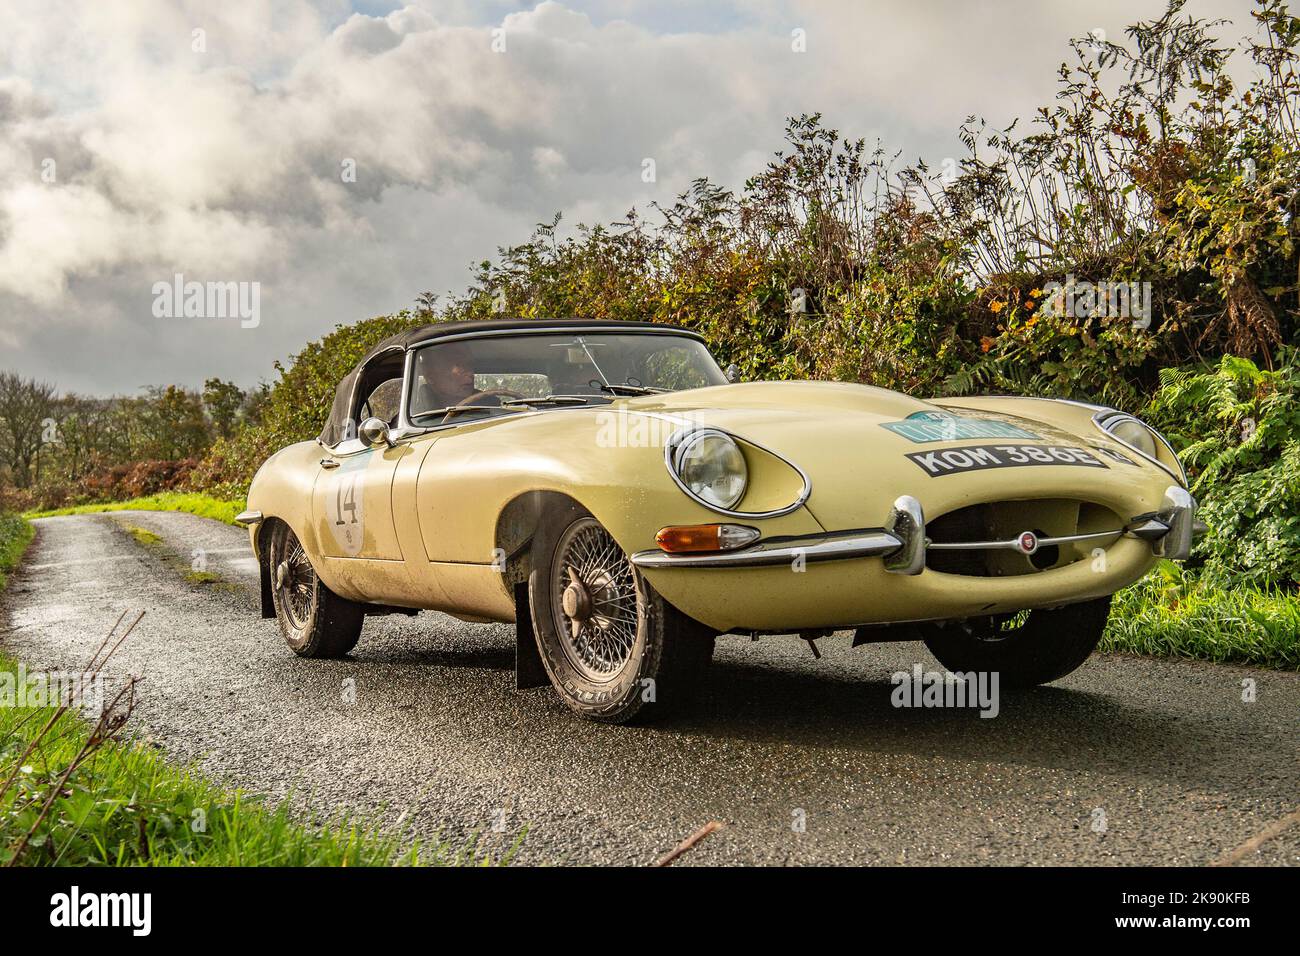 1967 E type jaguar vintage car Stock Photo